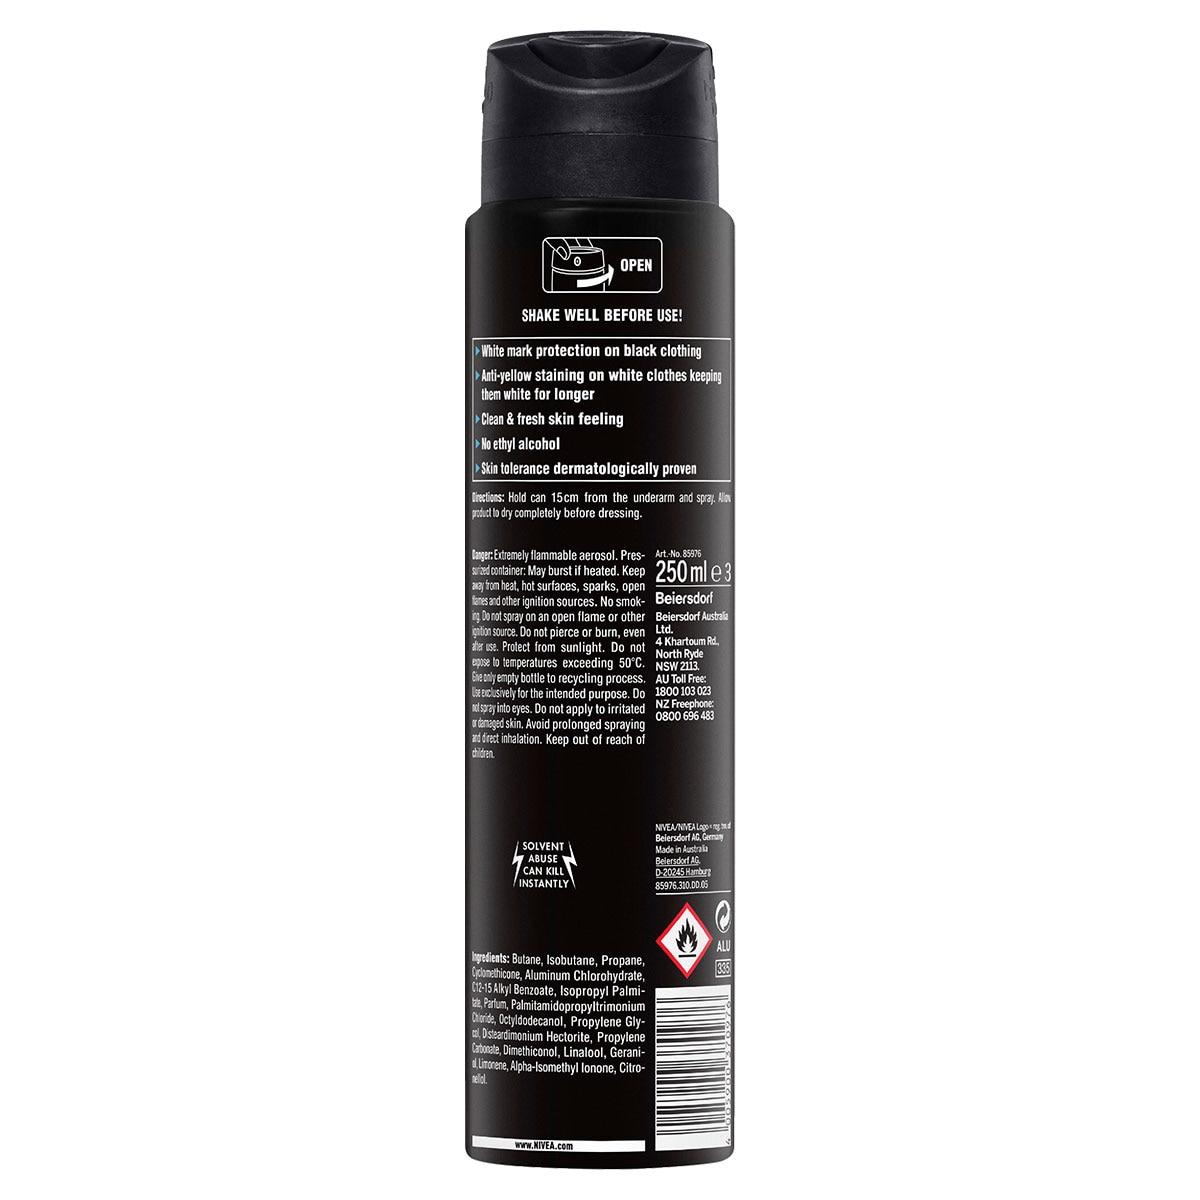 Nivea for Men Invisible Black & White Anti-Perspirant Deodarant Spray Fresh 250ml